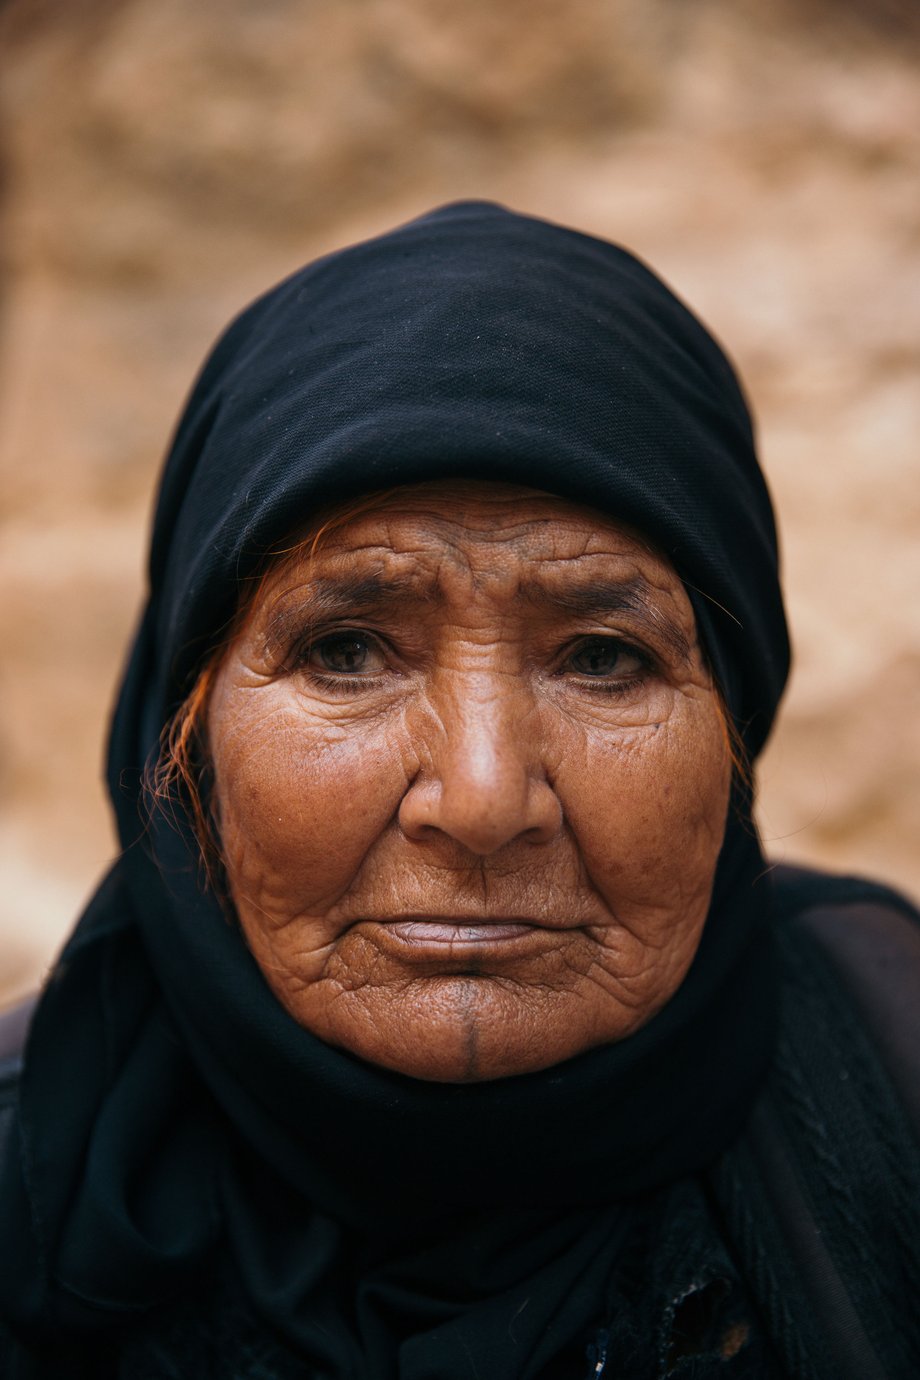 Tina Boyadjieva's image of a Jordanian woman recognized by ICP Concerned